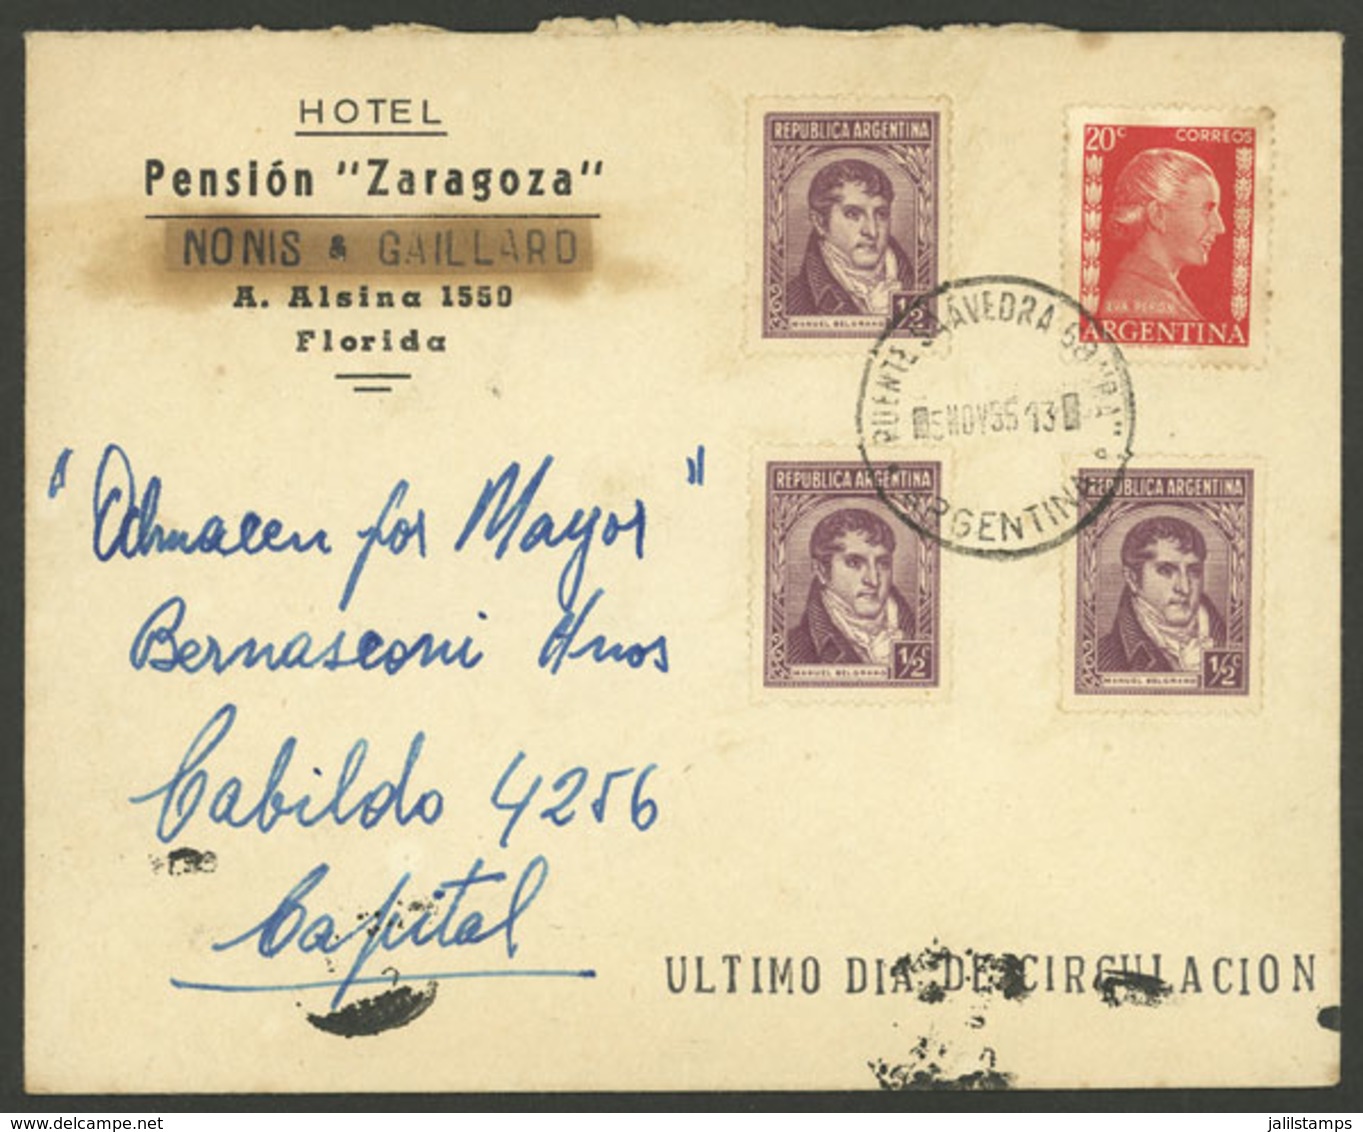 ARGENTINA: LAST DAY OF USE: Cover With Corner Card Of Hotel Pensión Zaragoza (Nonis & Gaillard) Franked With Eva Perón 2 - Préphilatélie